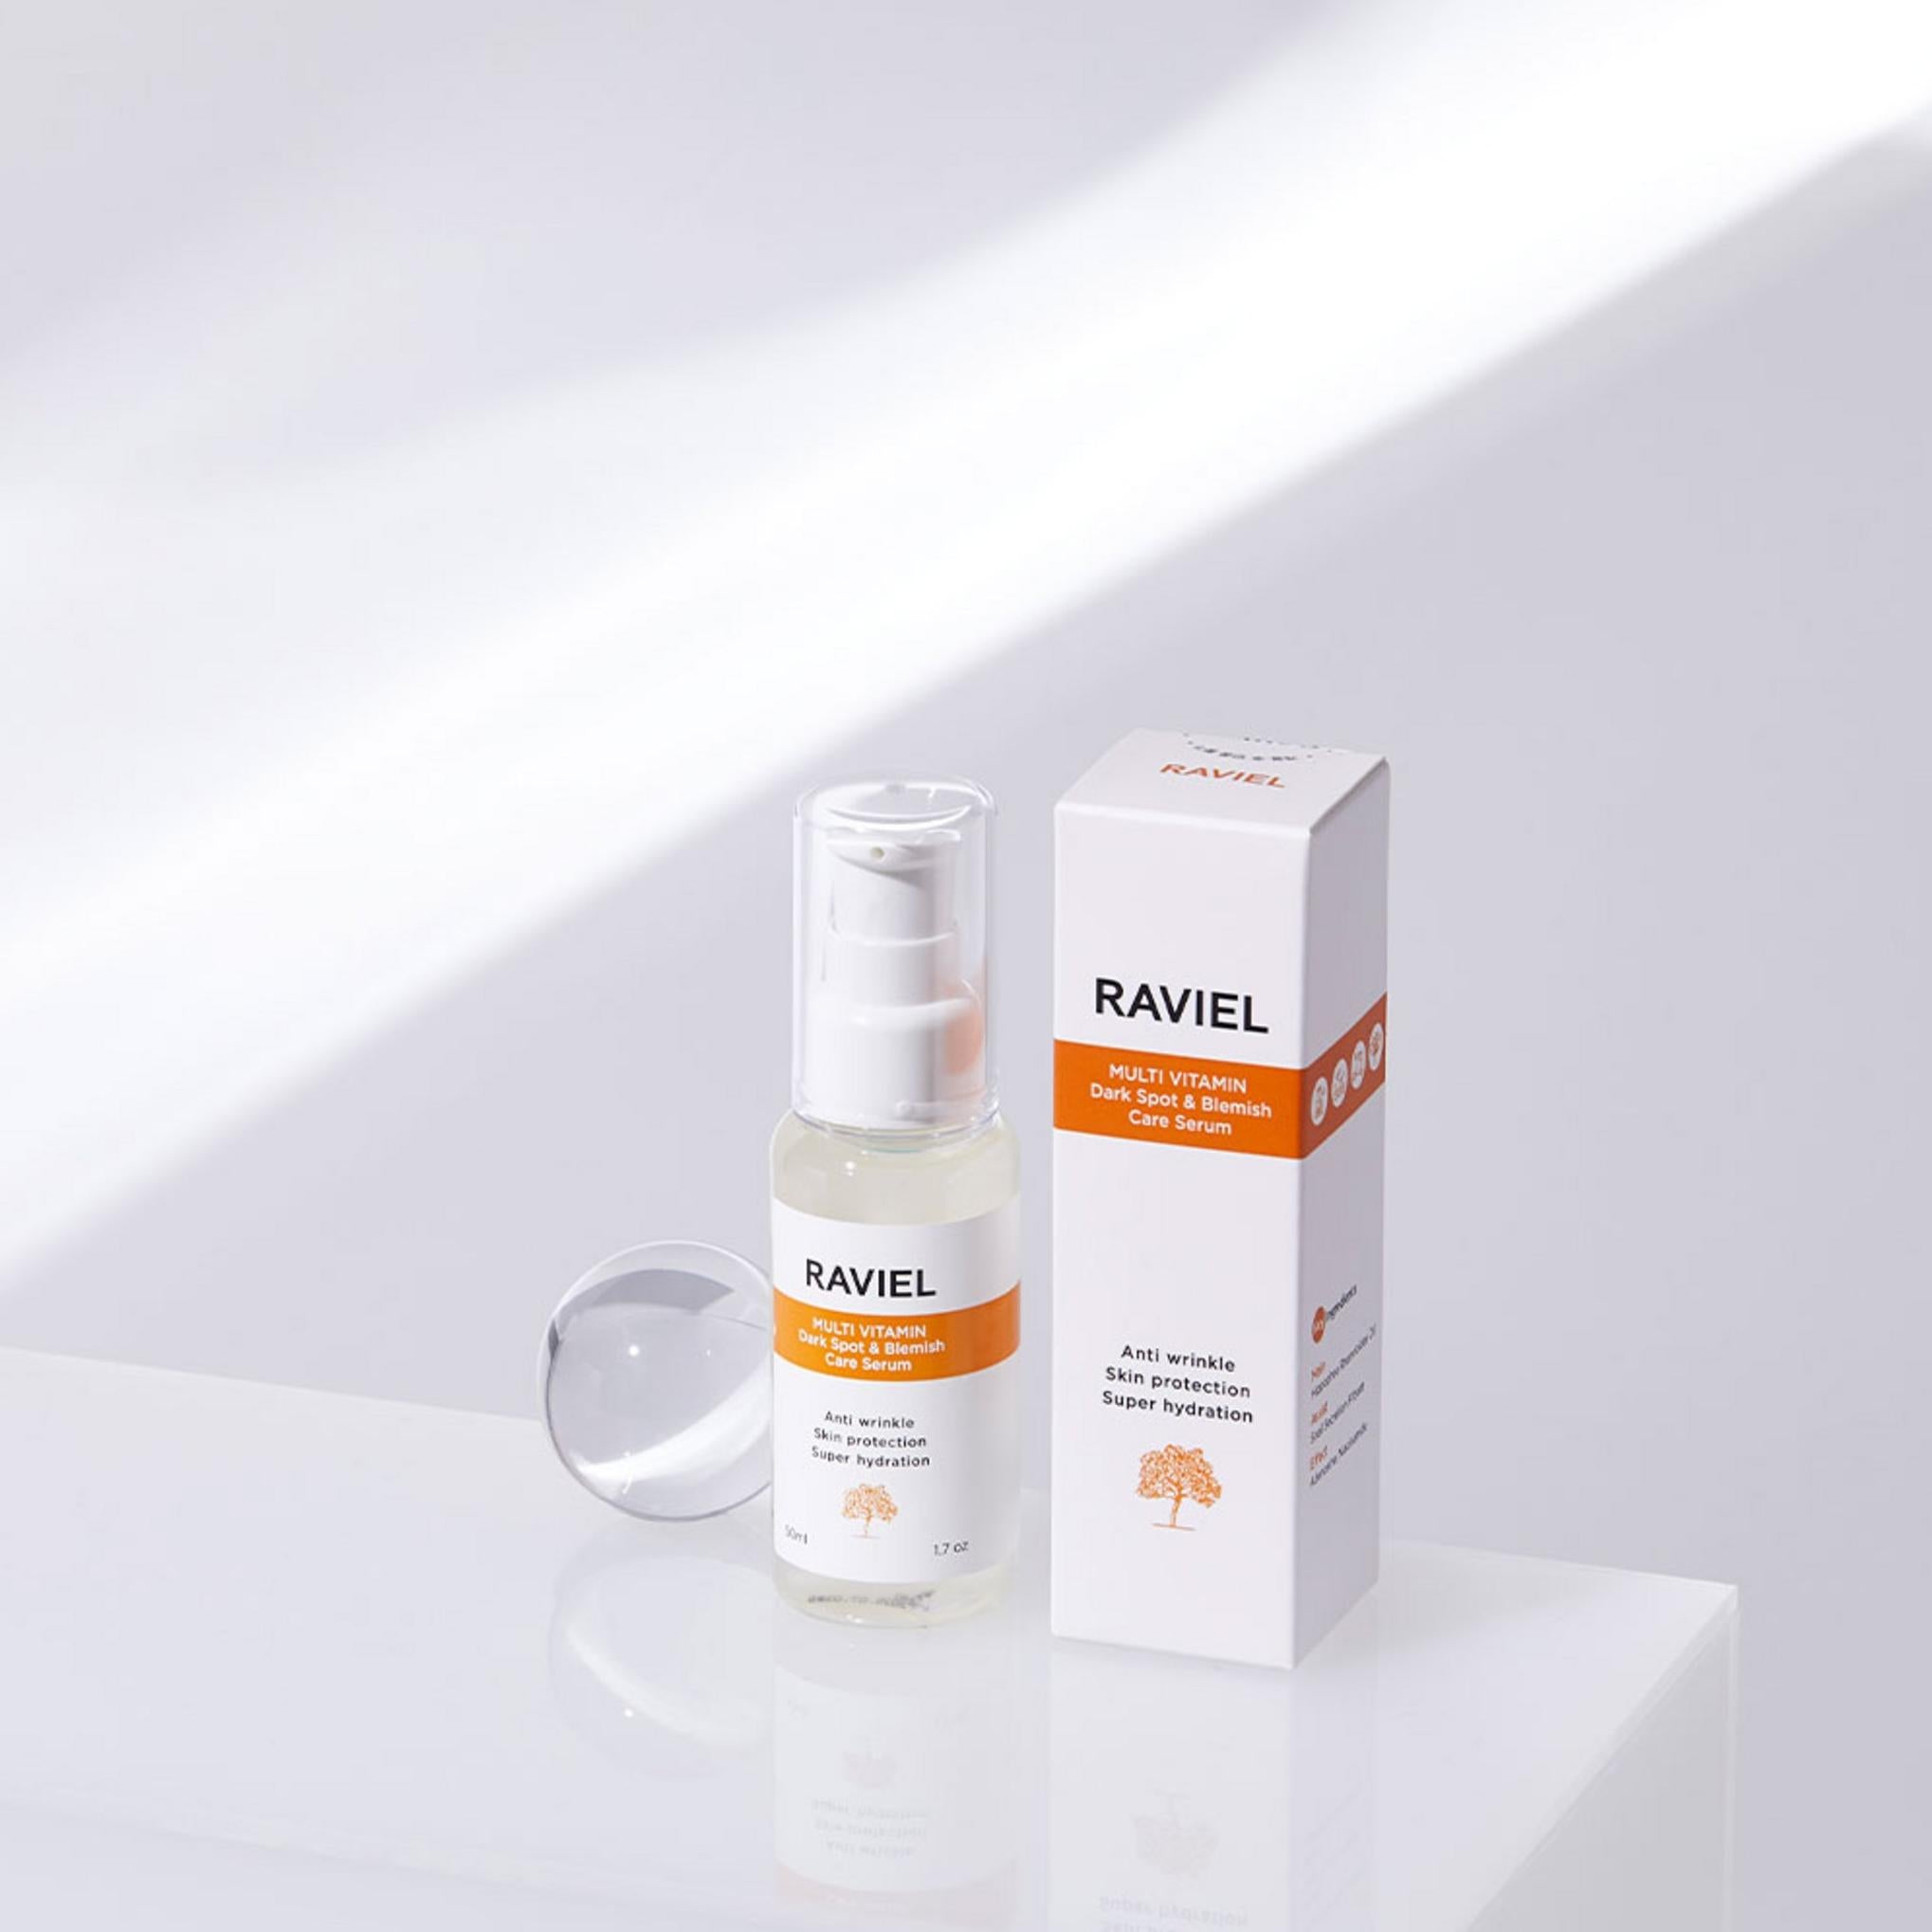 RAVIEL Multi-Vitamin Wrinkle Whitening Functional Blemish Spot Serum